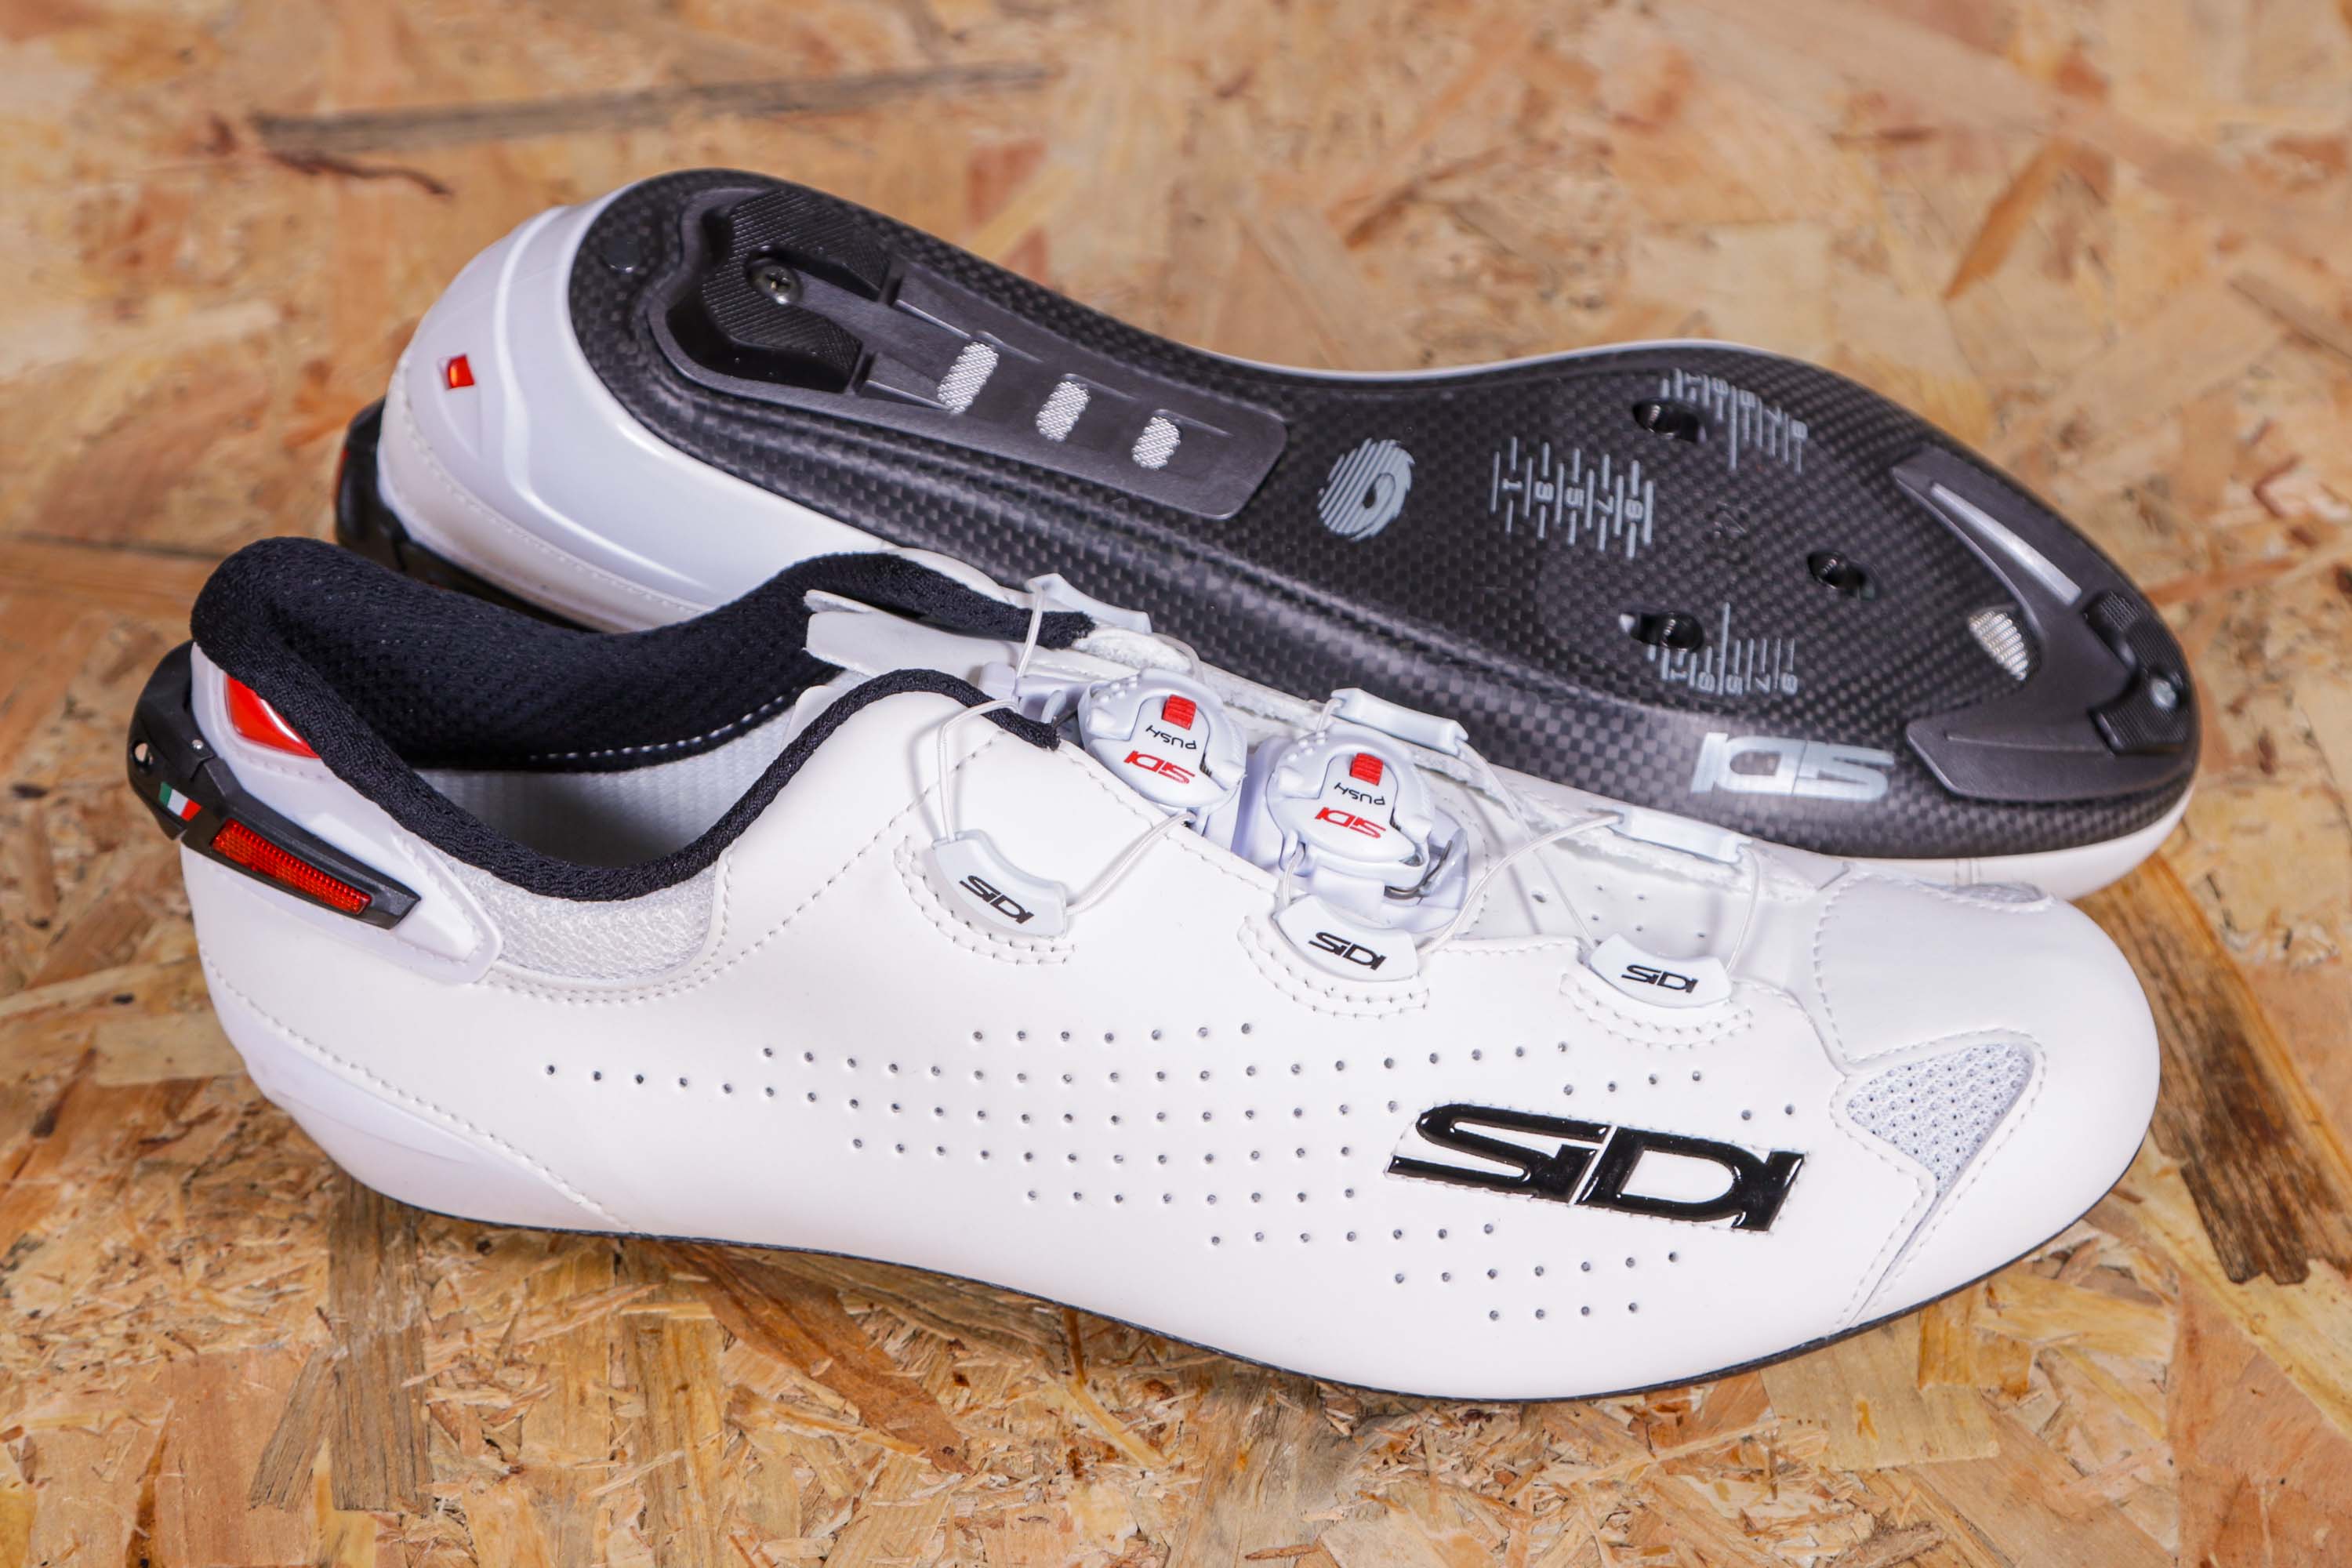 Review: Sidi Shot 2 Road Shoes 